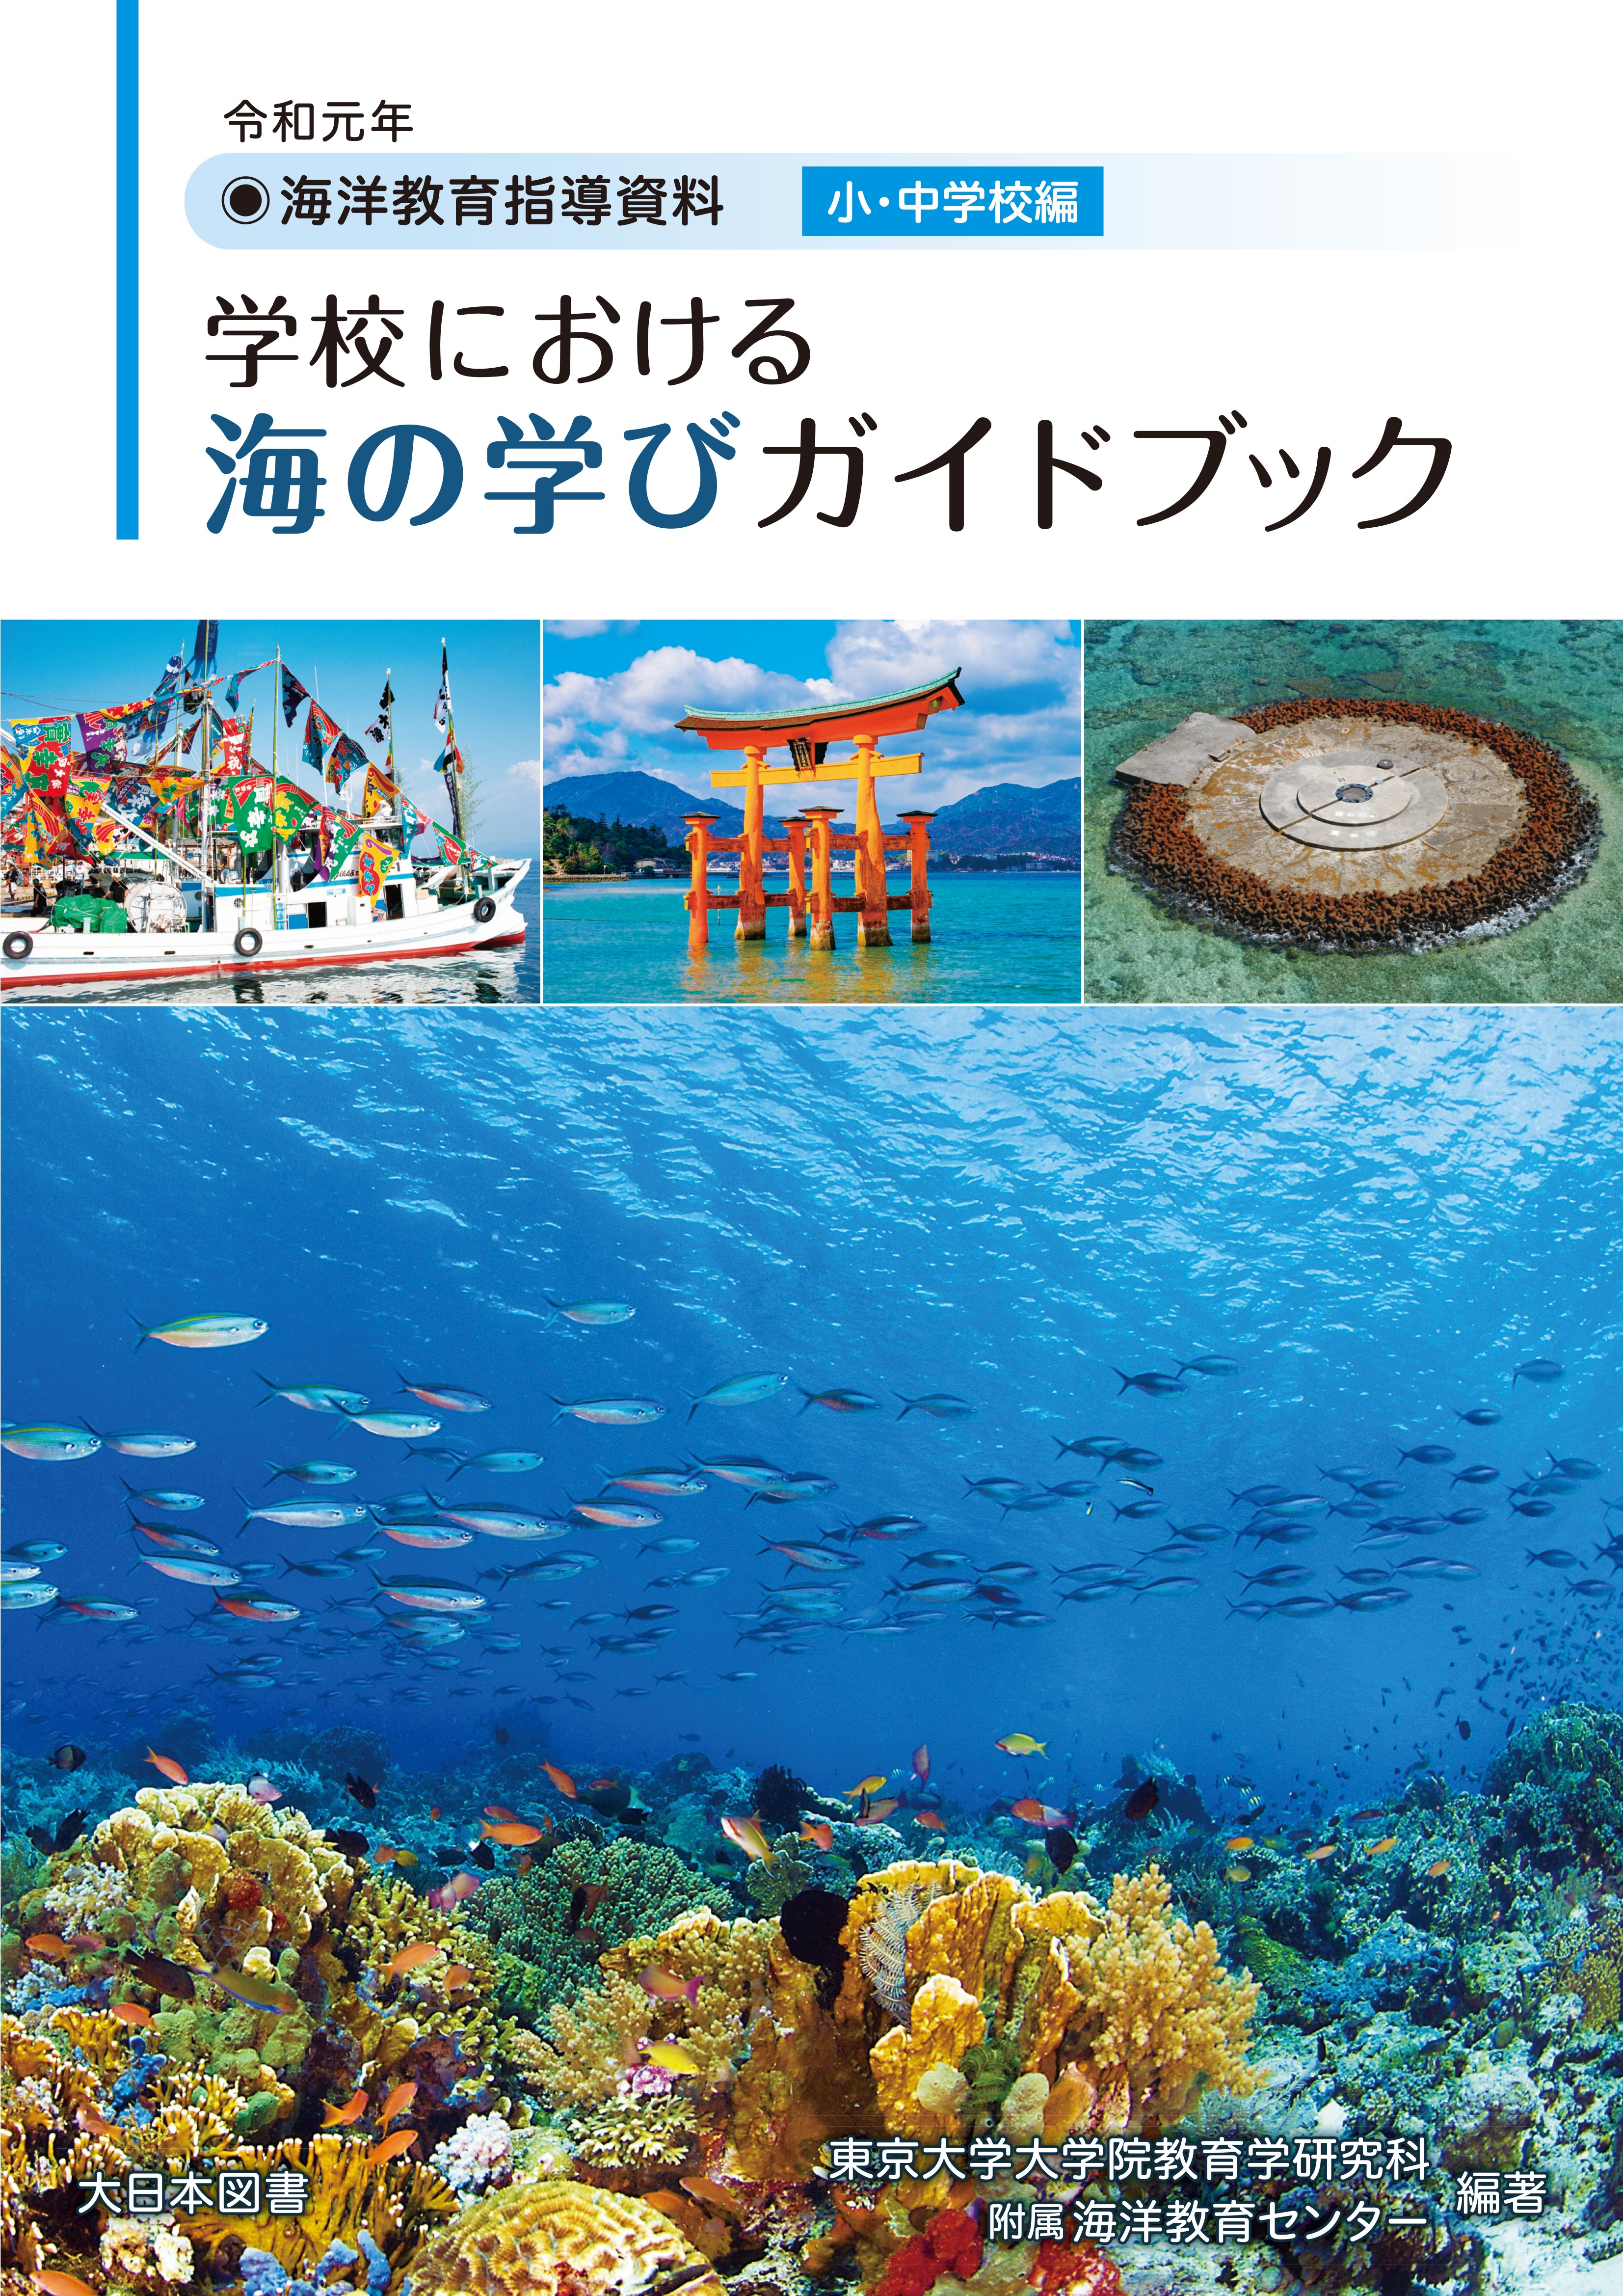 four picture of ship, Itsukushima shrine, underwater etc.